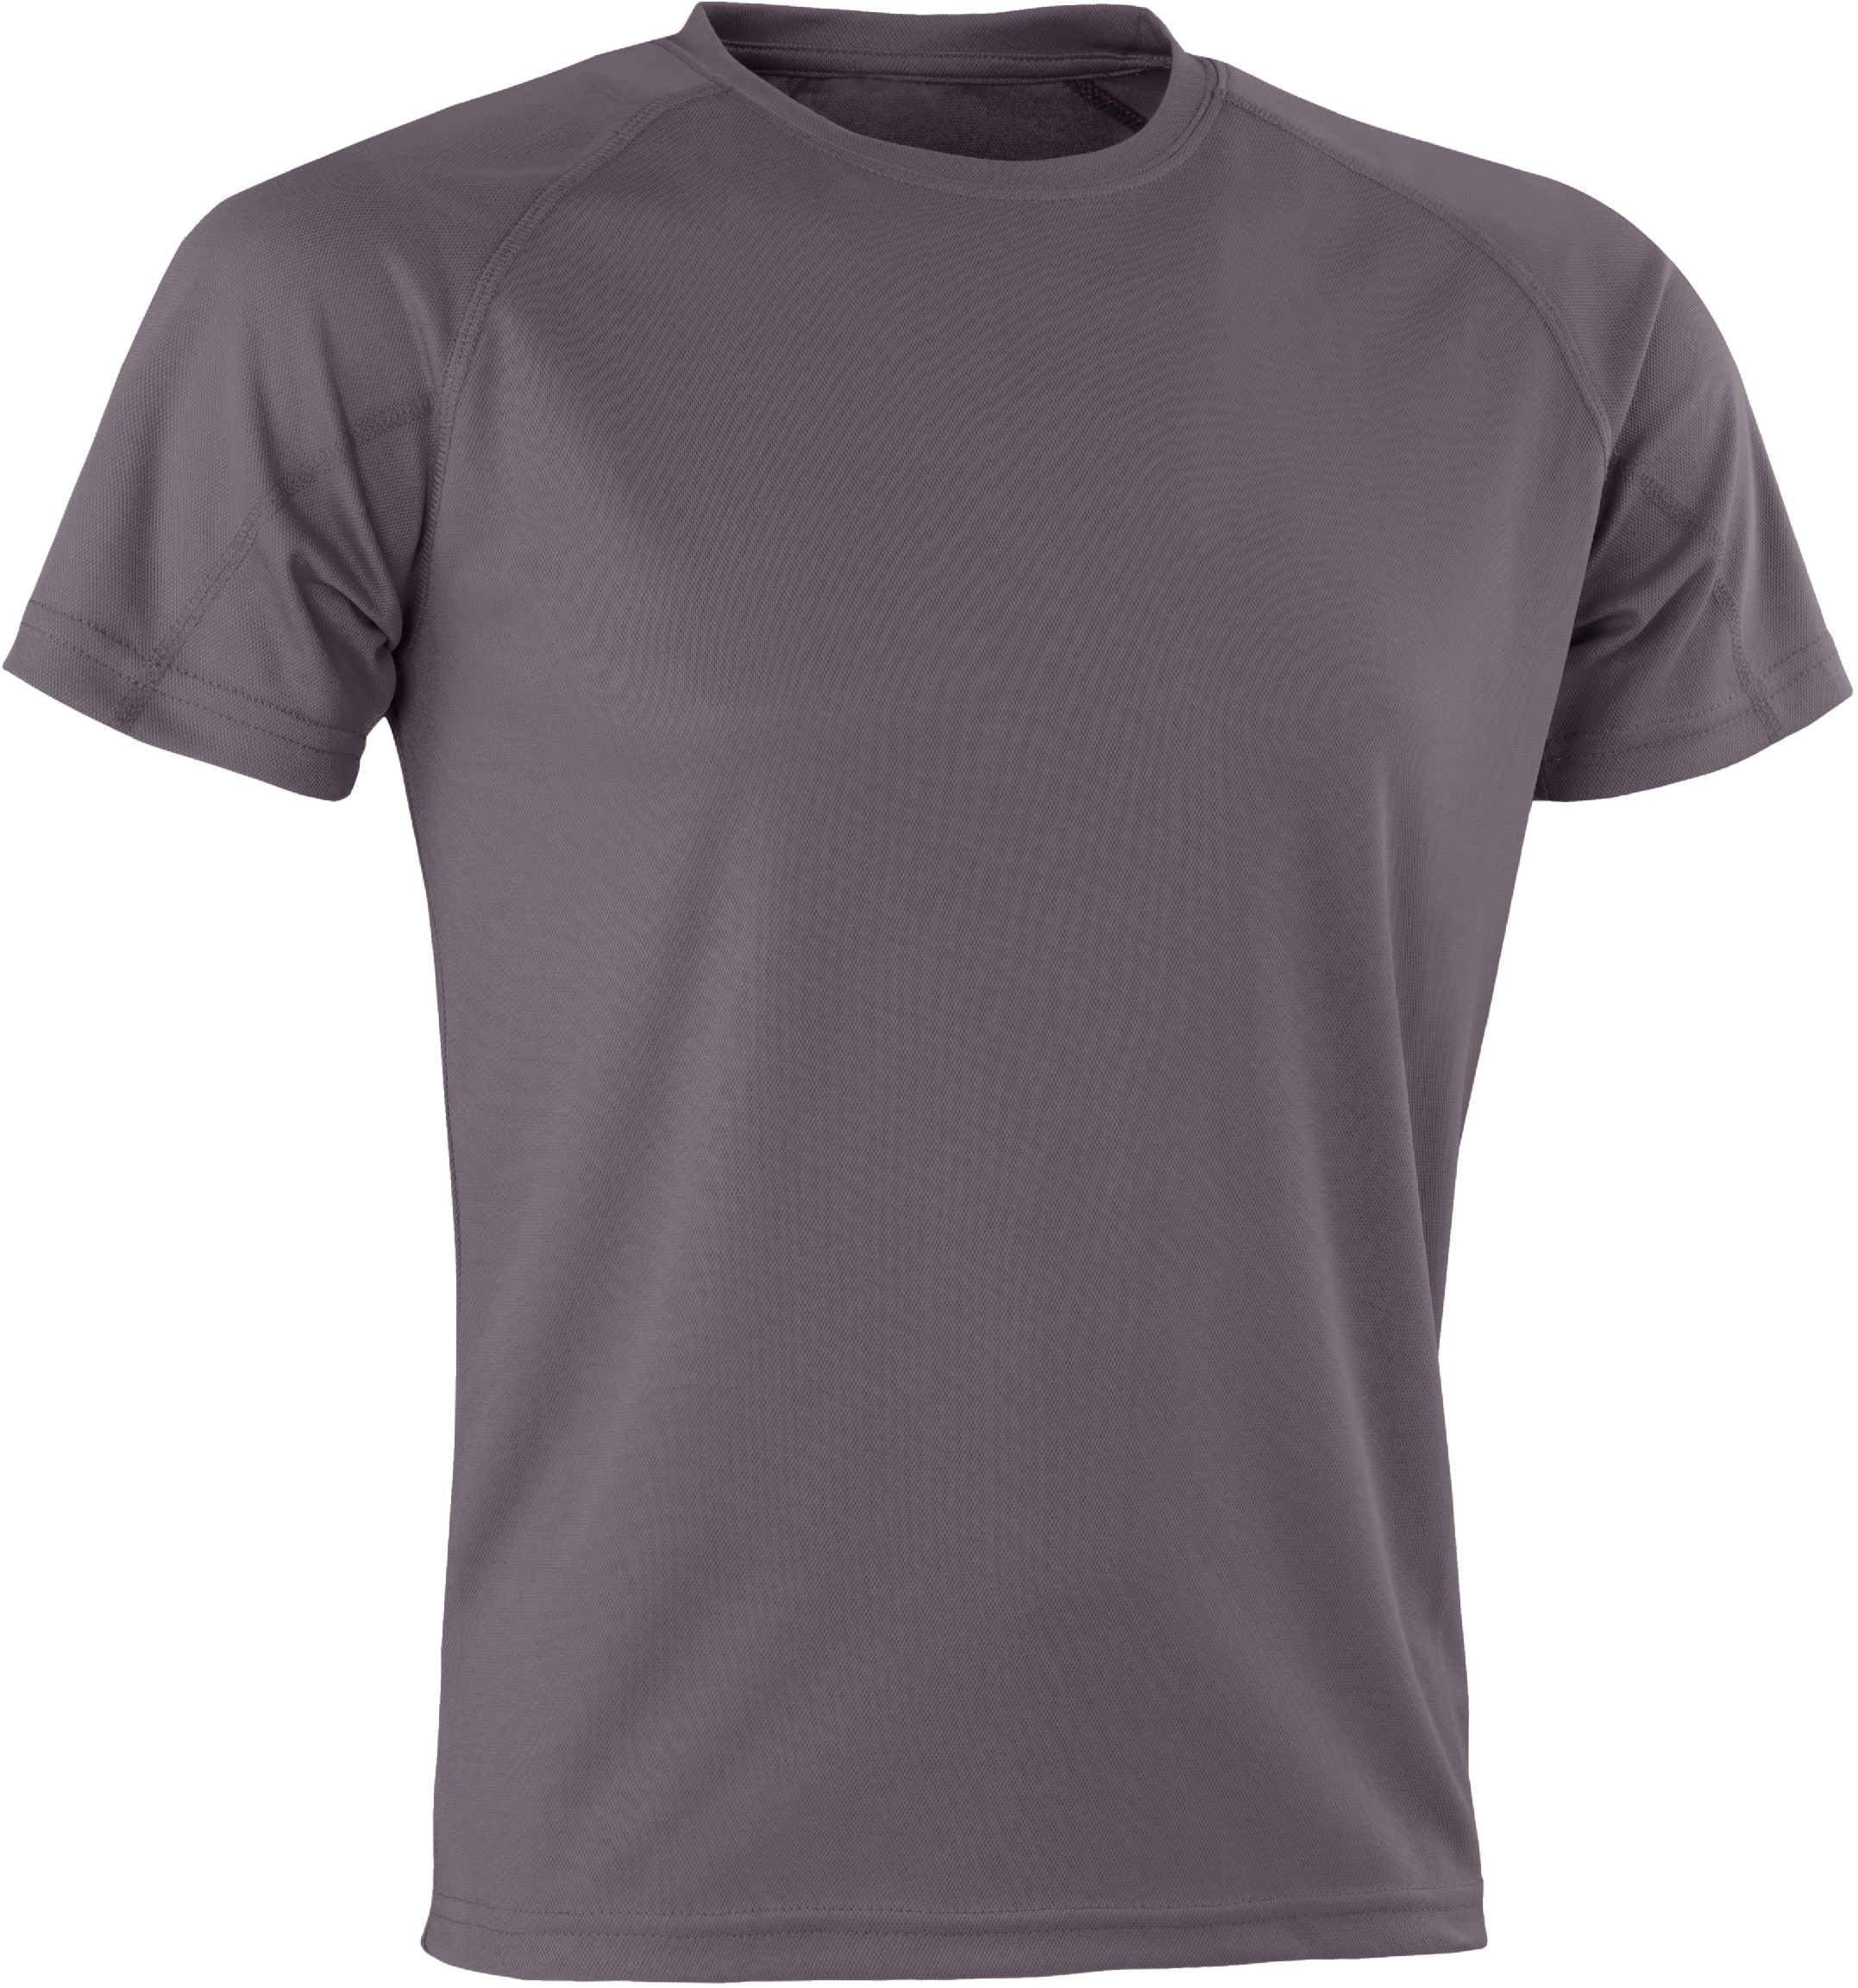 Sportovní tričko Aircool S287X Barva: šedá, Velikost: XL